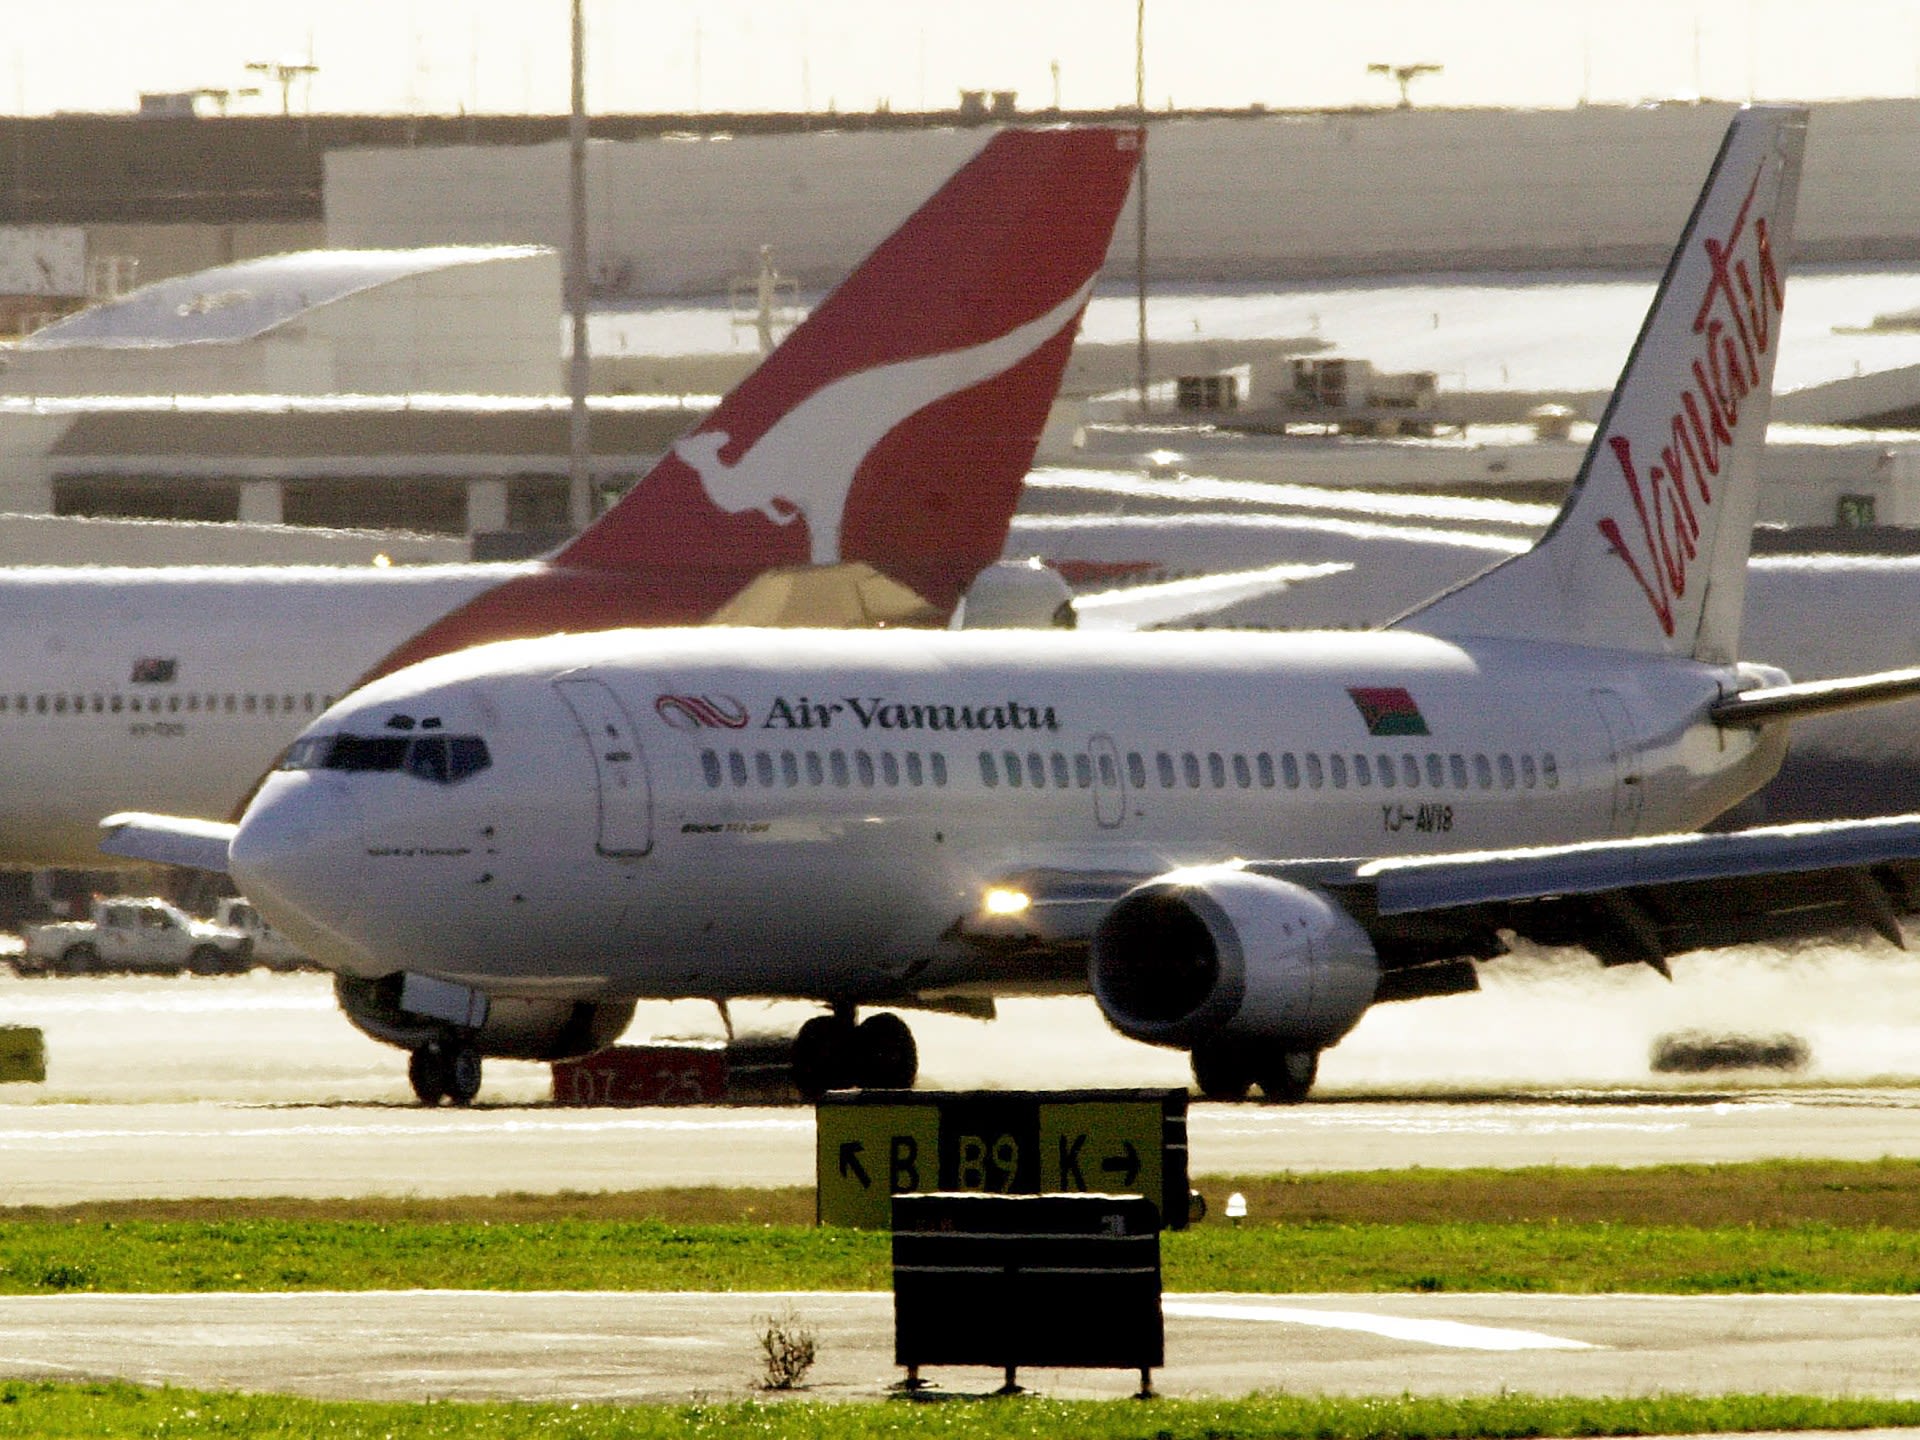 Air Vanuatu goes into liquidation, thousands of passengers stranded